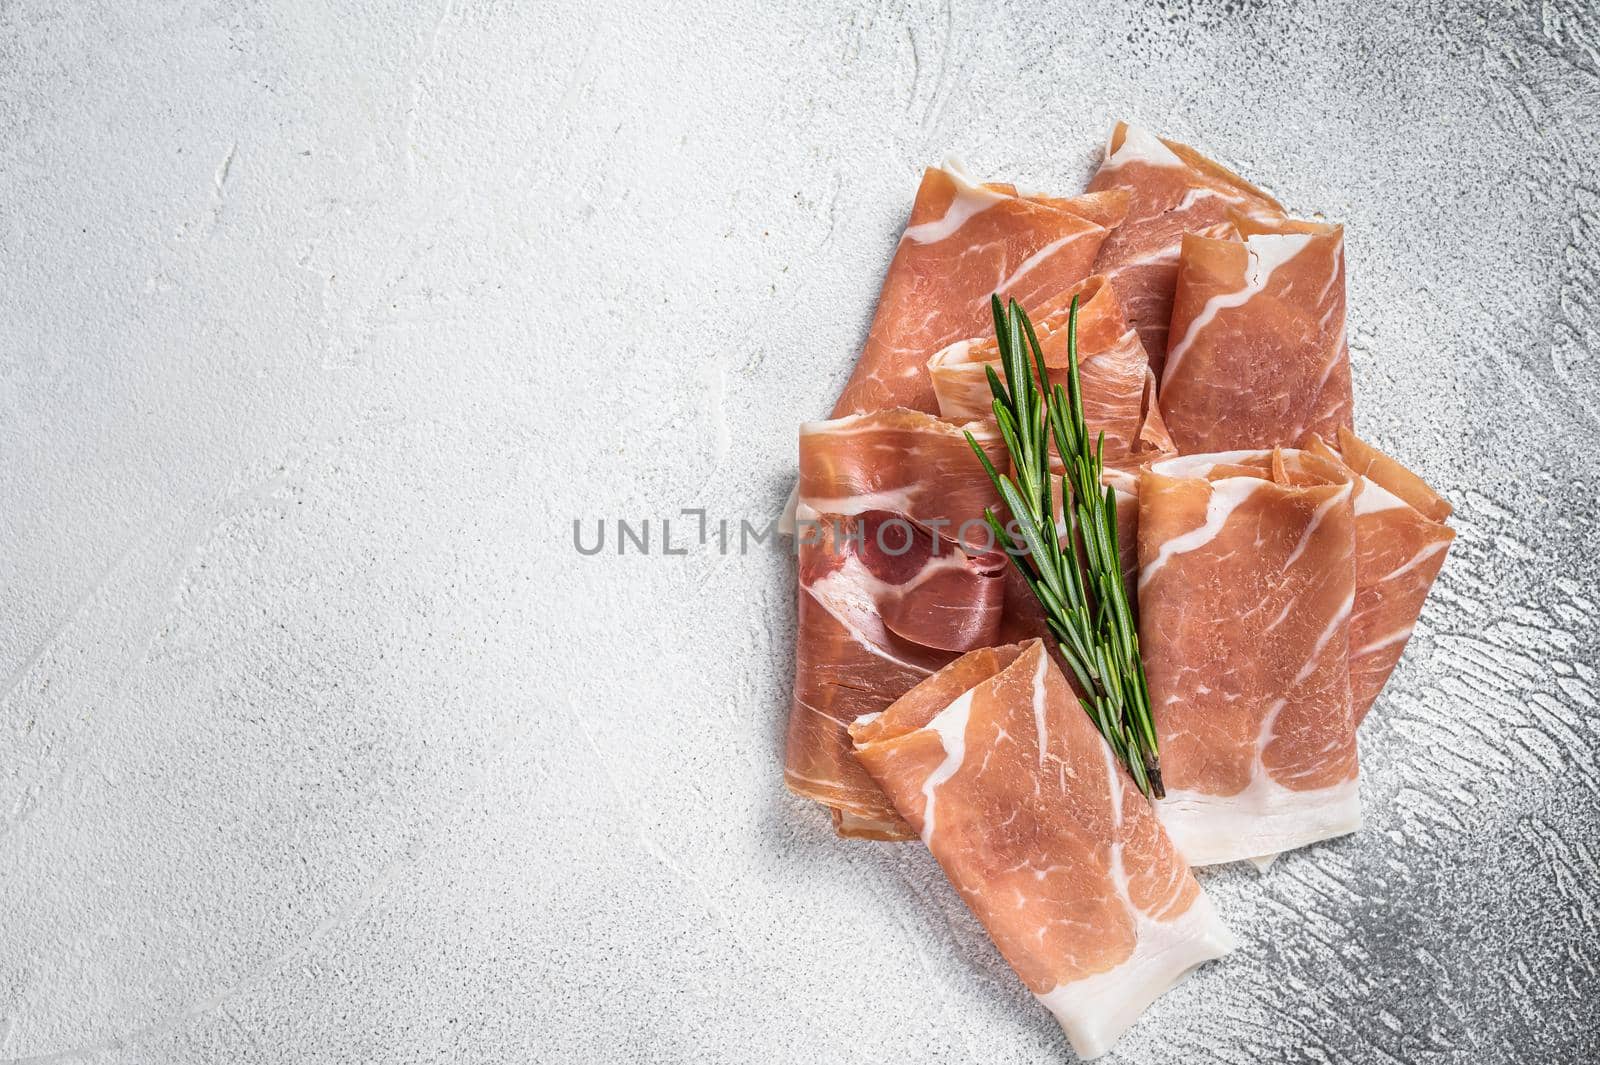 Italian prosciutto crudo parma ham on a table. White background. Top View. Copy space.